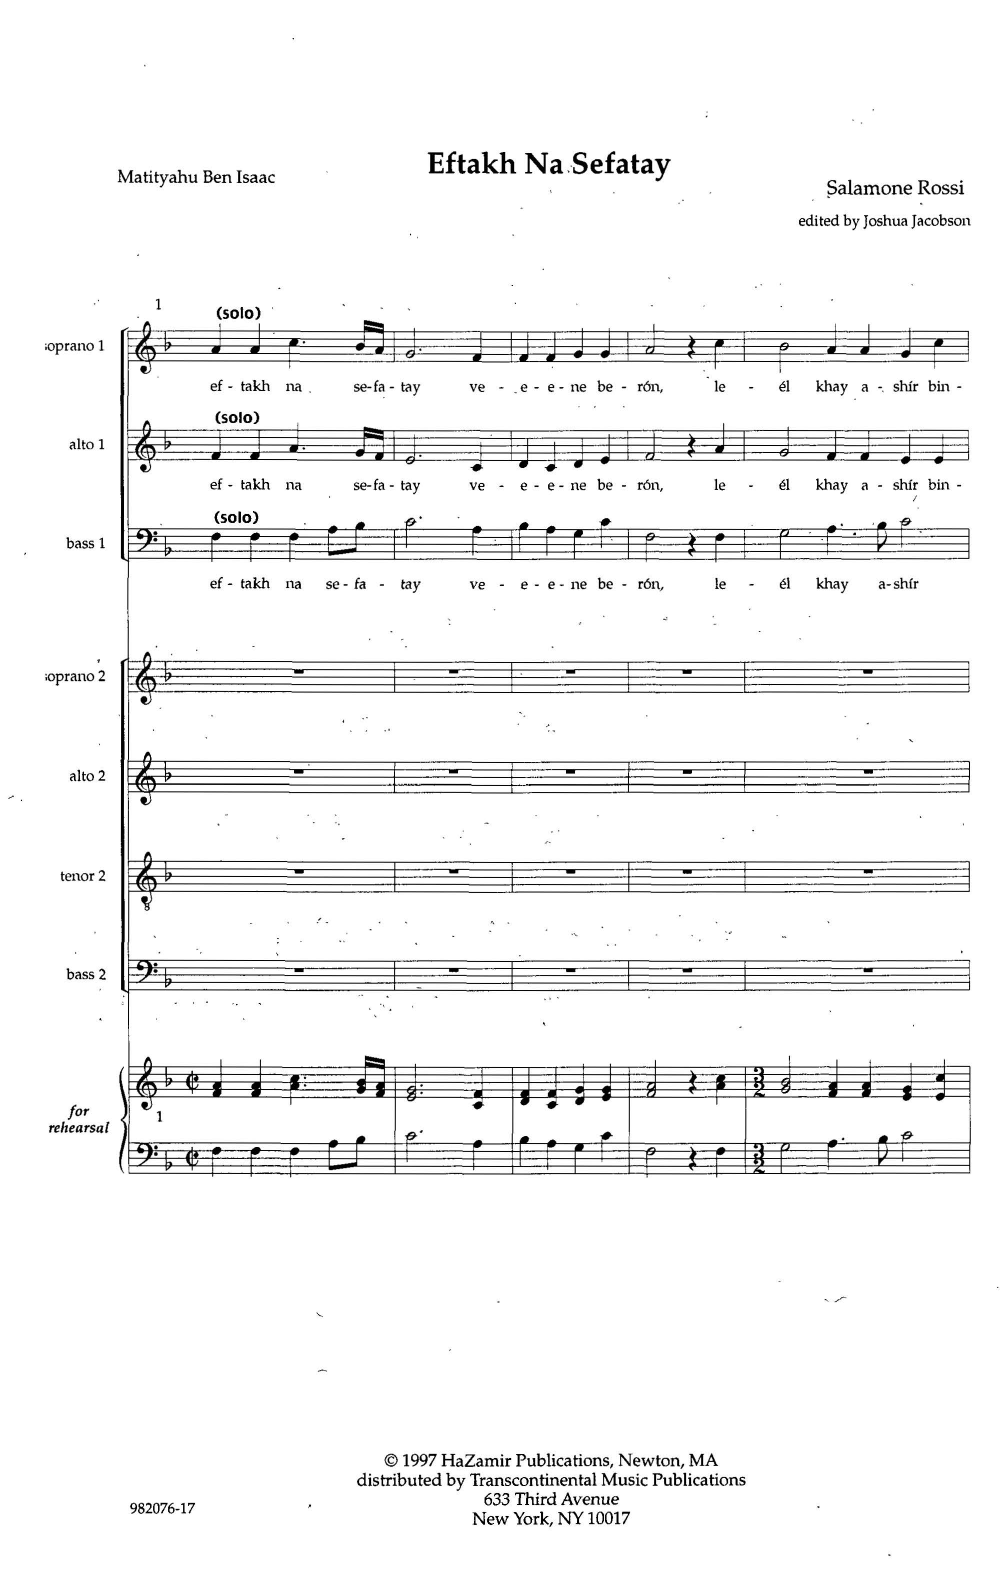 Salamone Rossi Eftakh Na Sefatay Sheet Music Notes & Chords for SATB Choir - Download or Print PDF